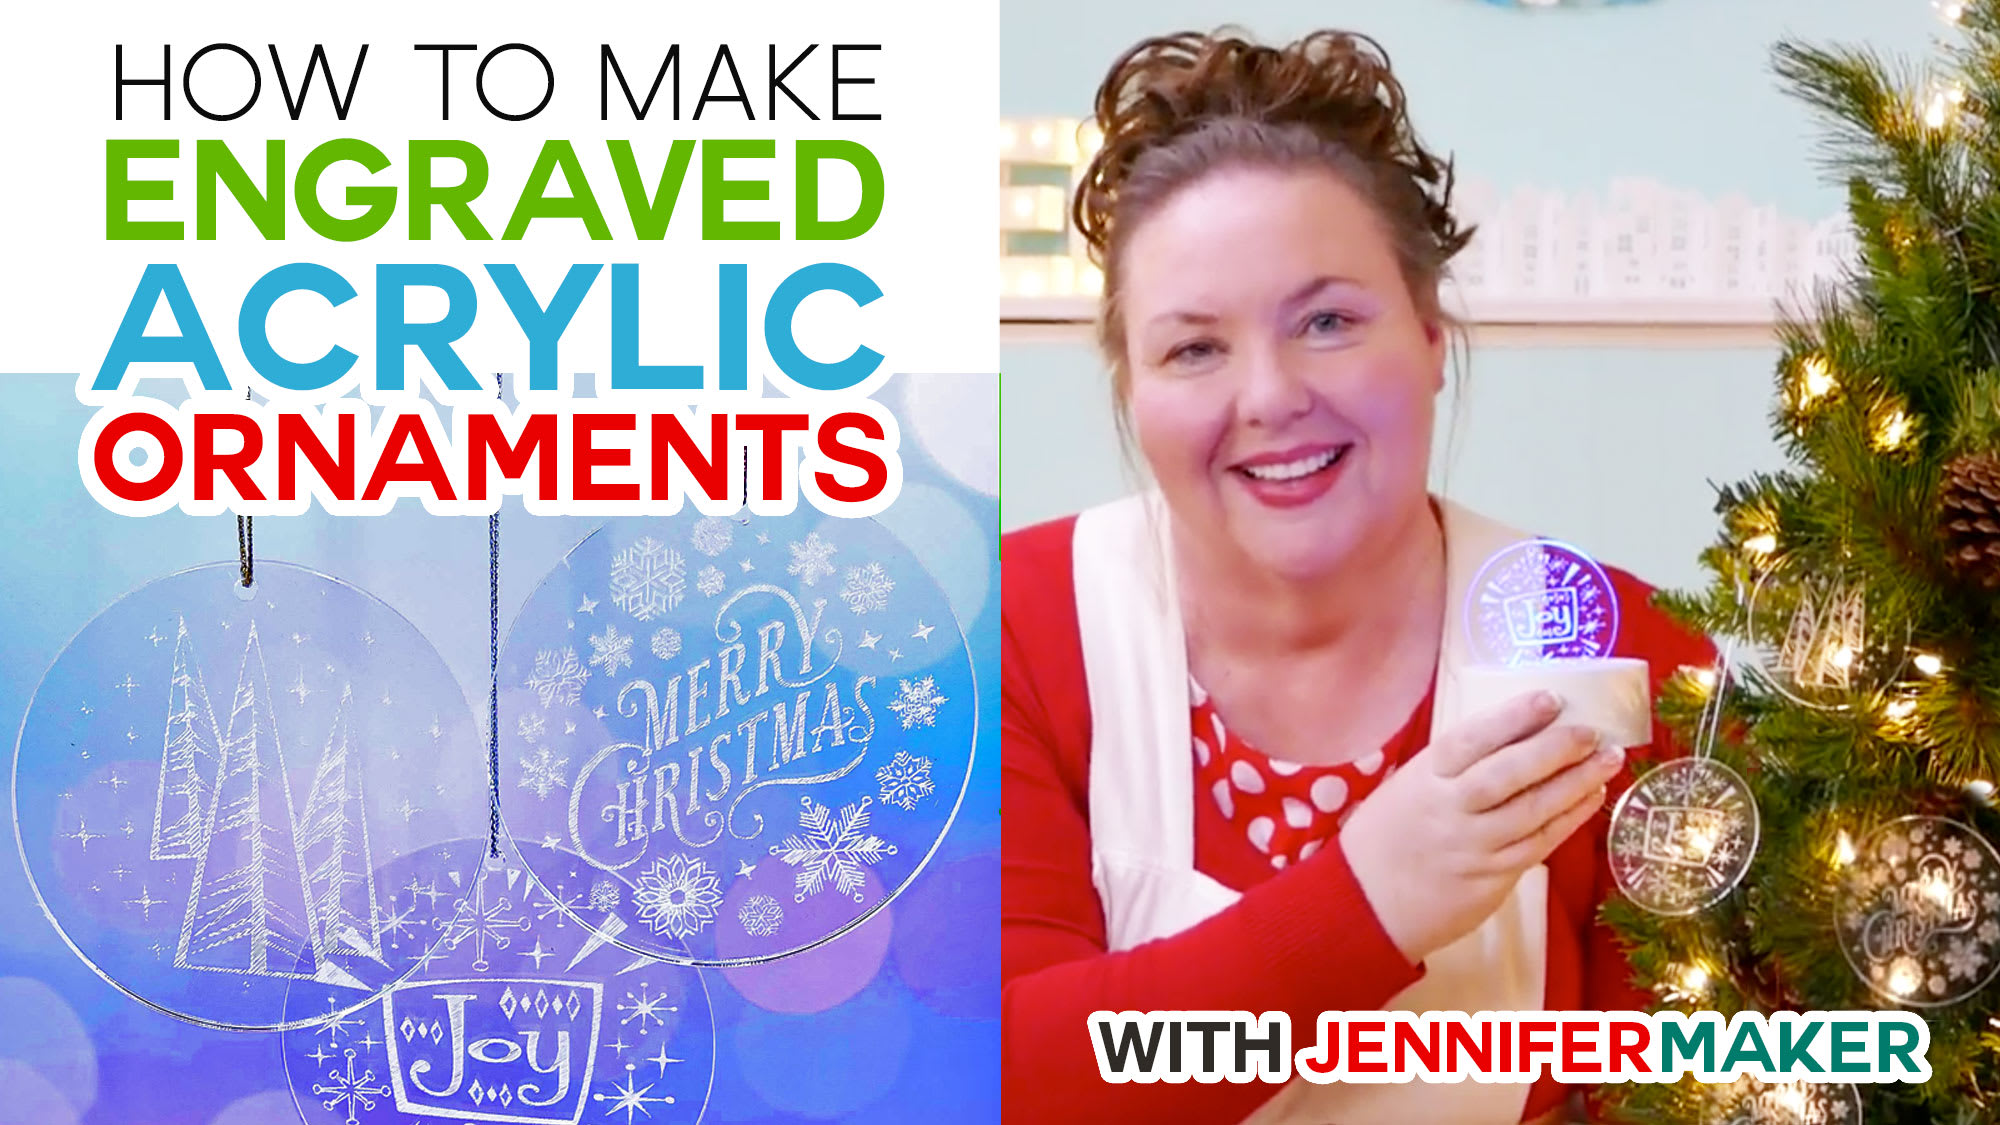 DIY Personalized Engraved Acrylic Ornaments - Jennifer Maker